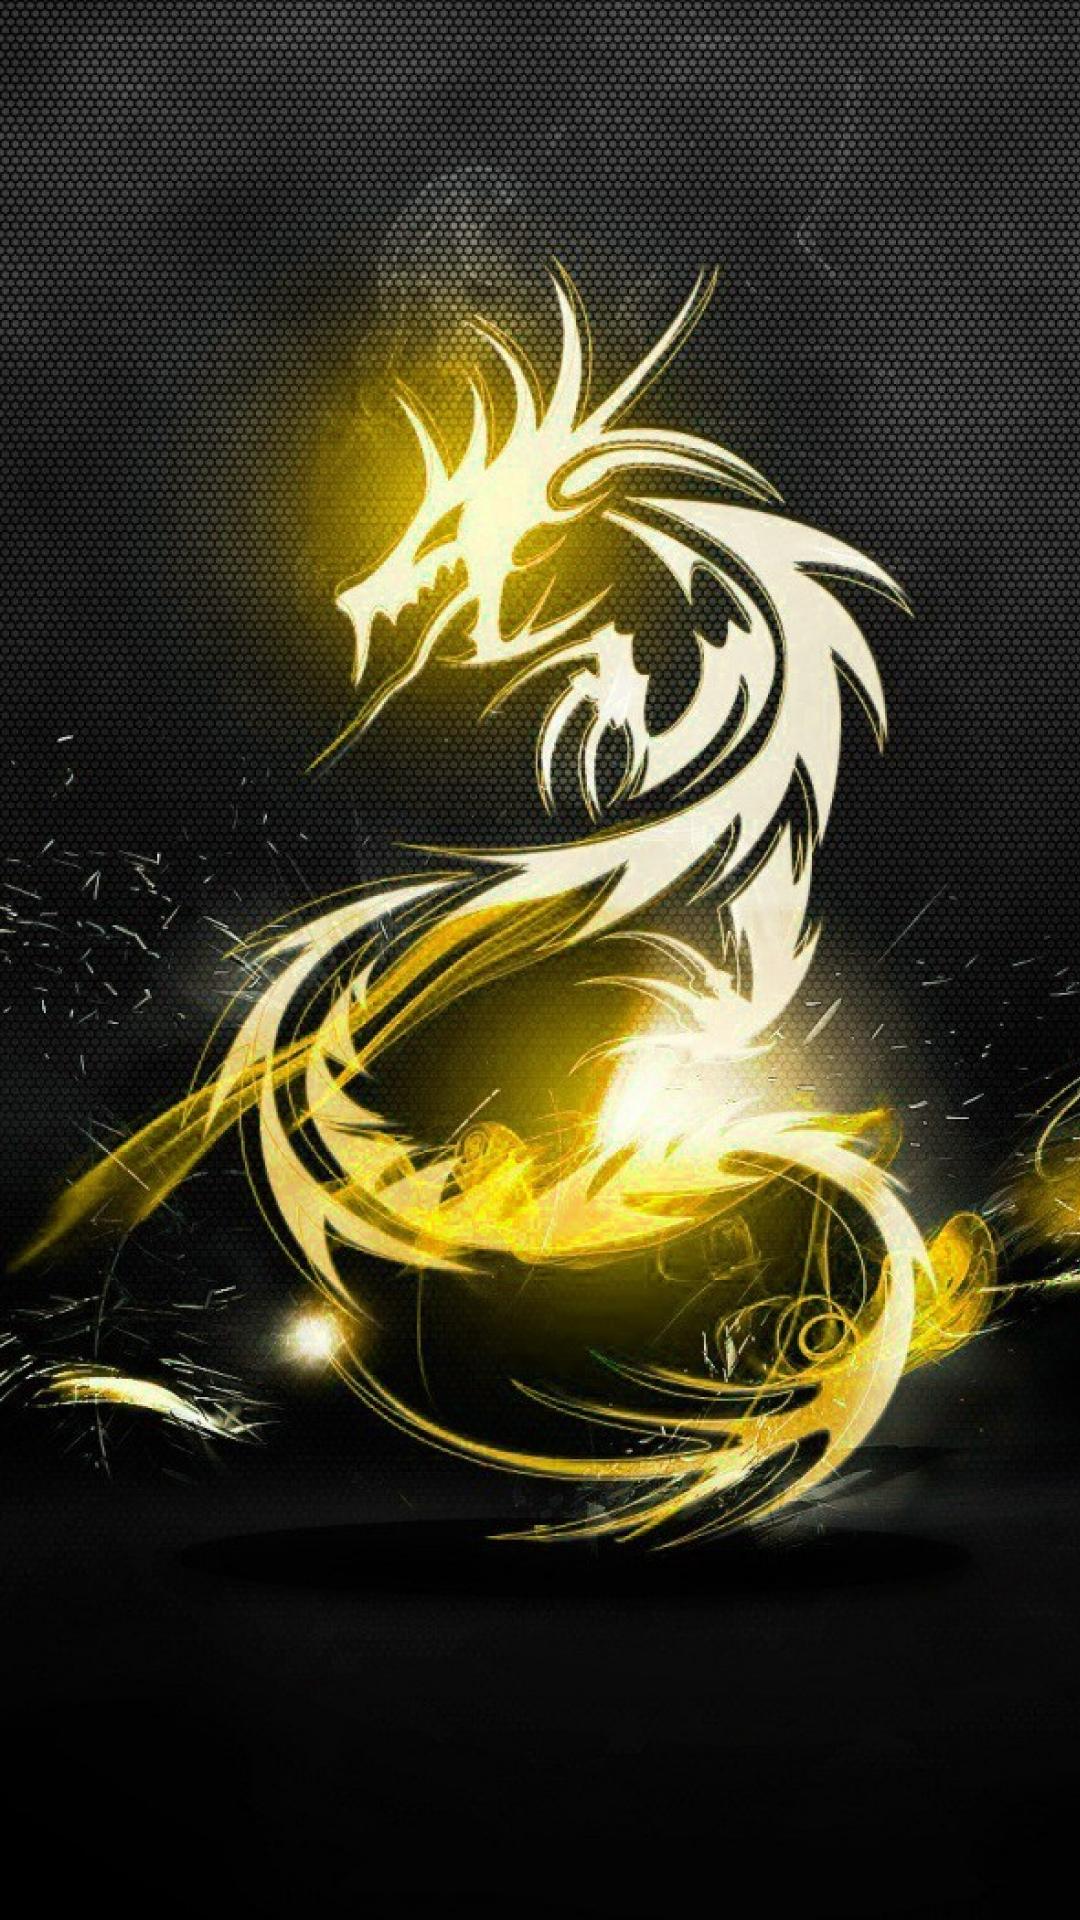 Black and Gold Dragon Wallpapers  PixelsTalkNet